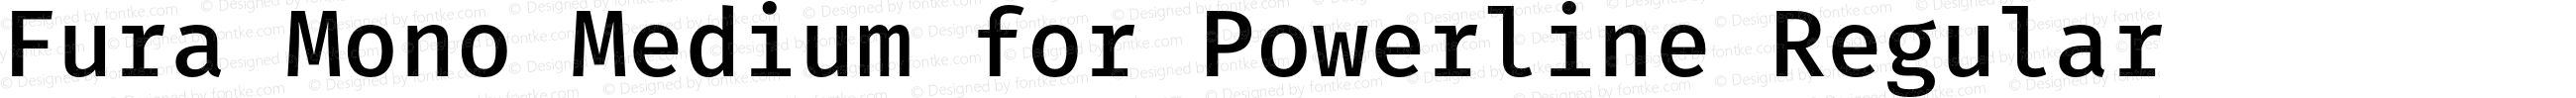 Fura Mono Medium for Powerline Nerd Font Plus Font Awesome Plus Octicons Mono